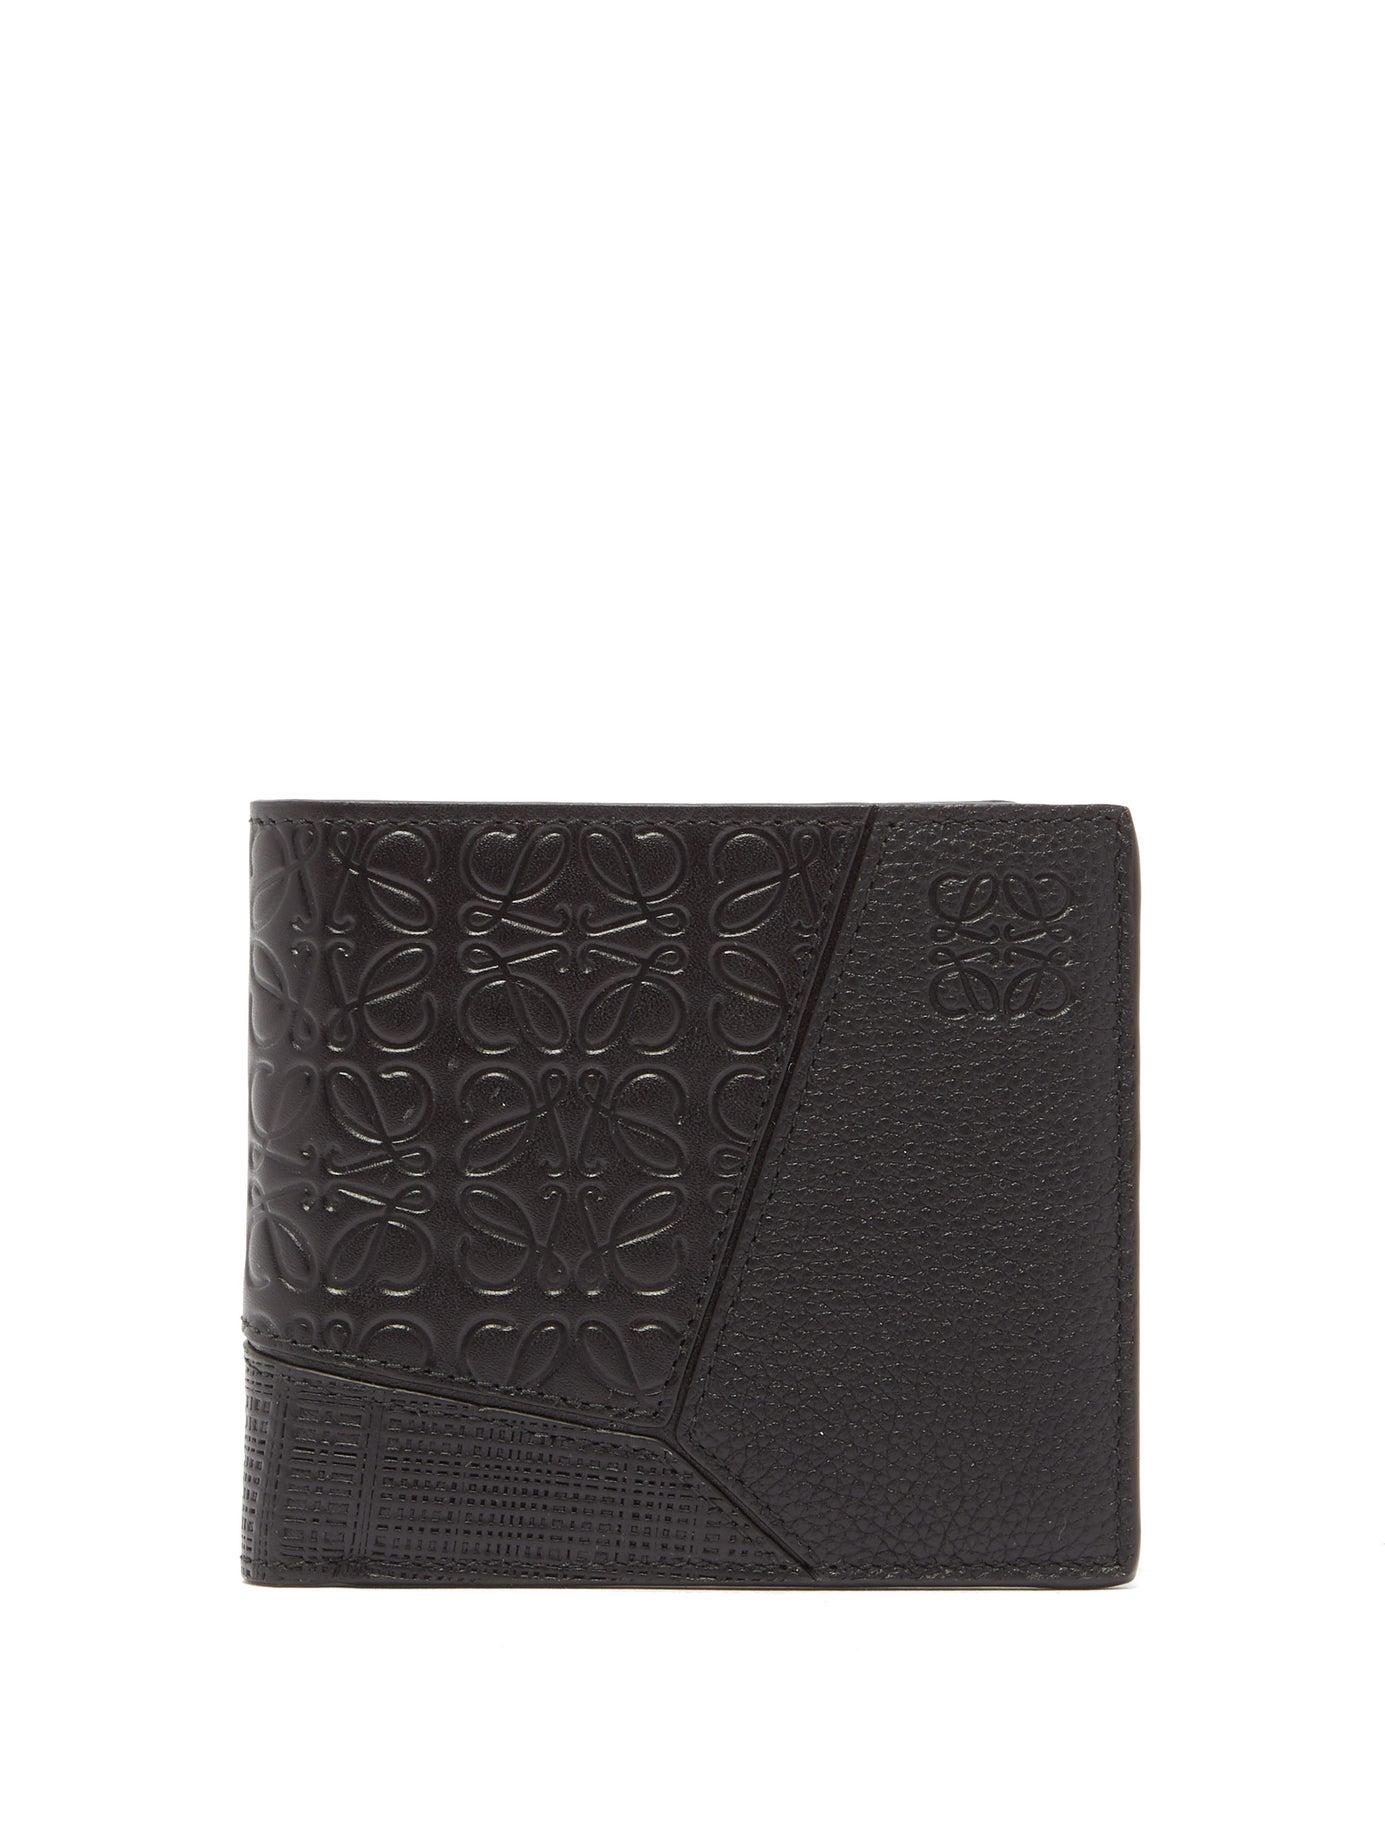 Loewe Puzzle Grained Leather Bi Fold Wallet in Black for Men - Lyst